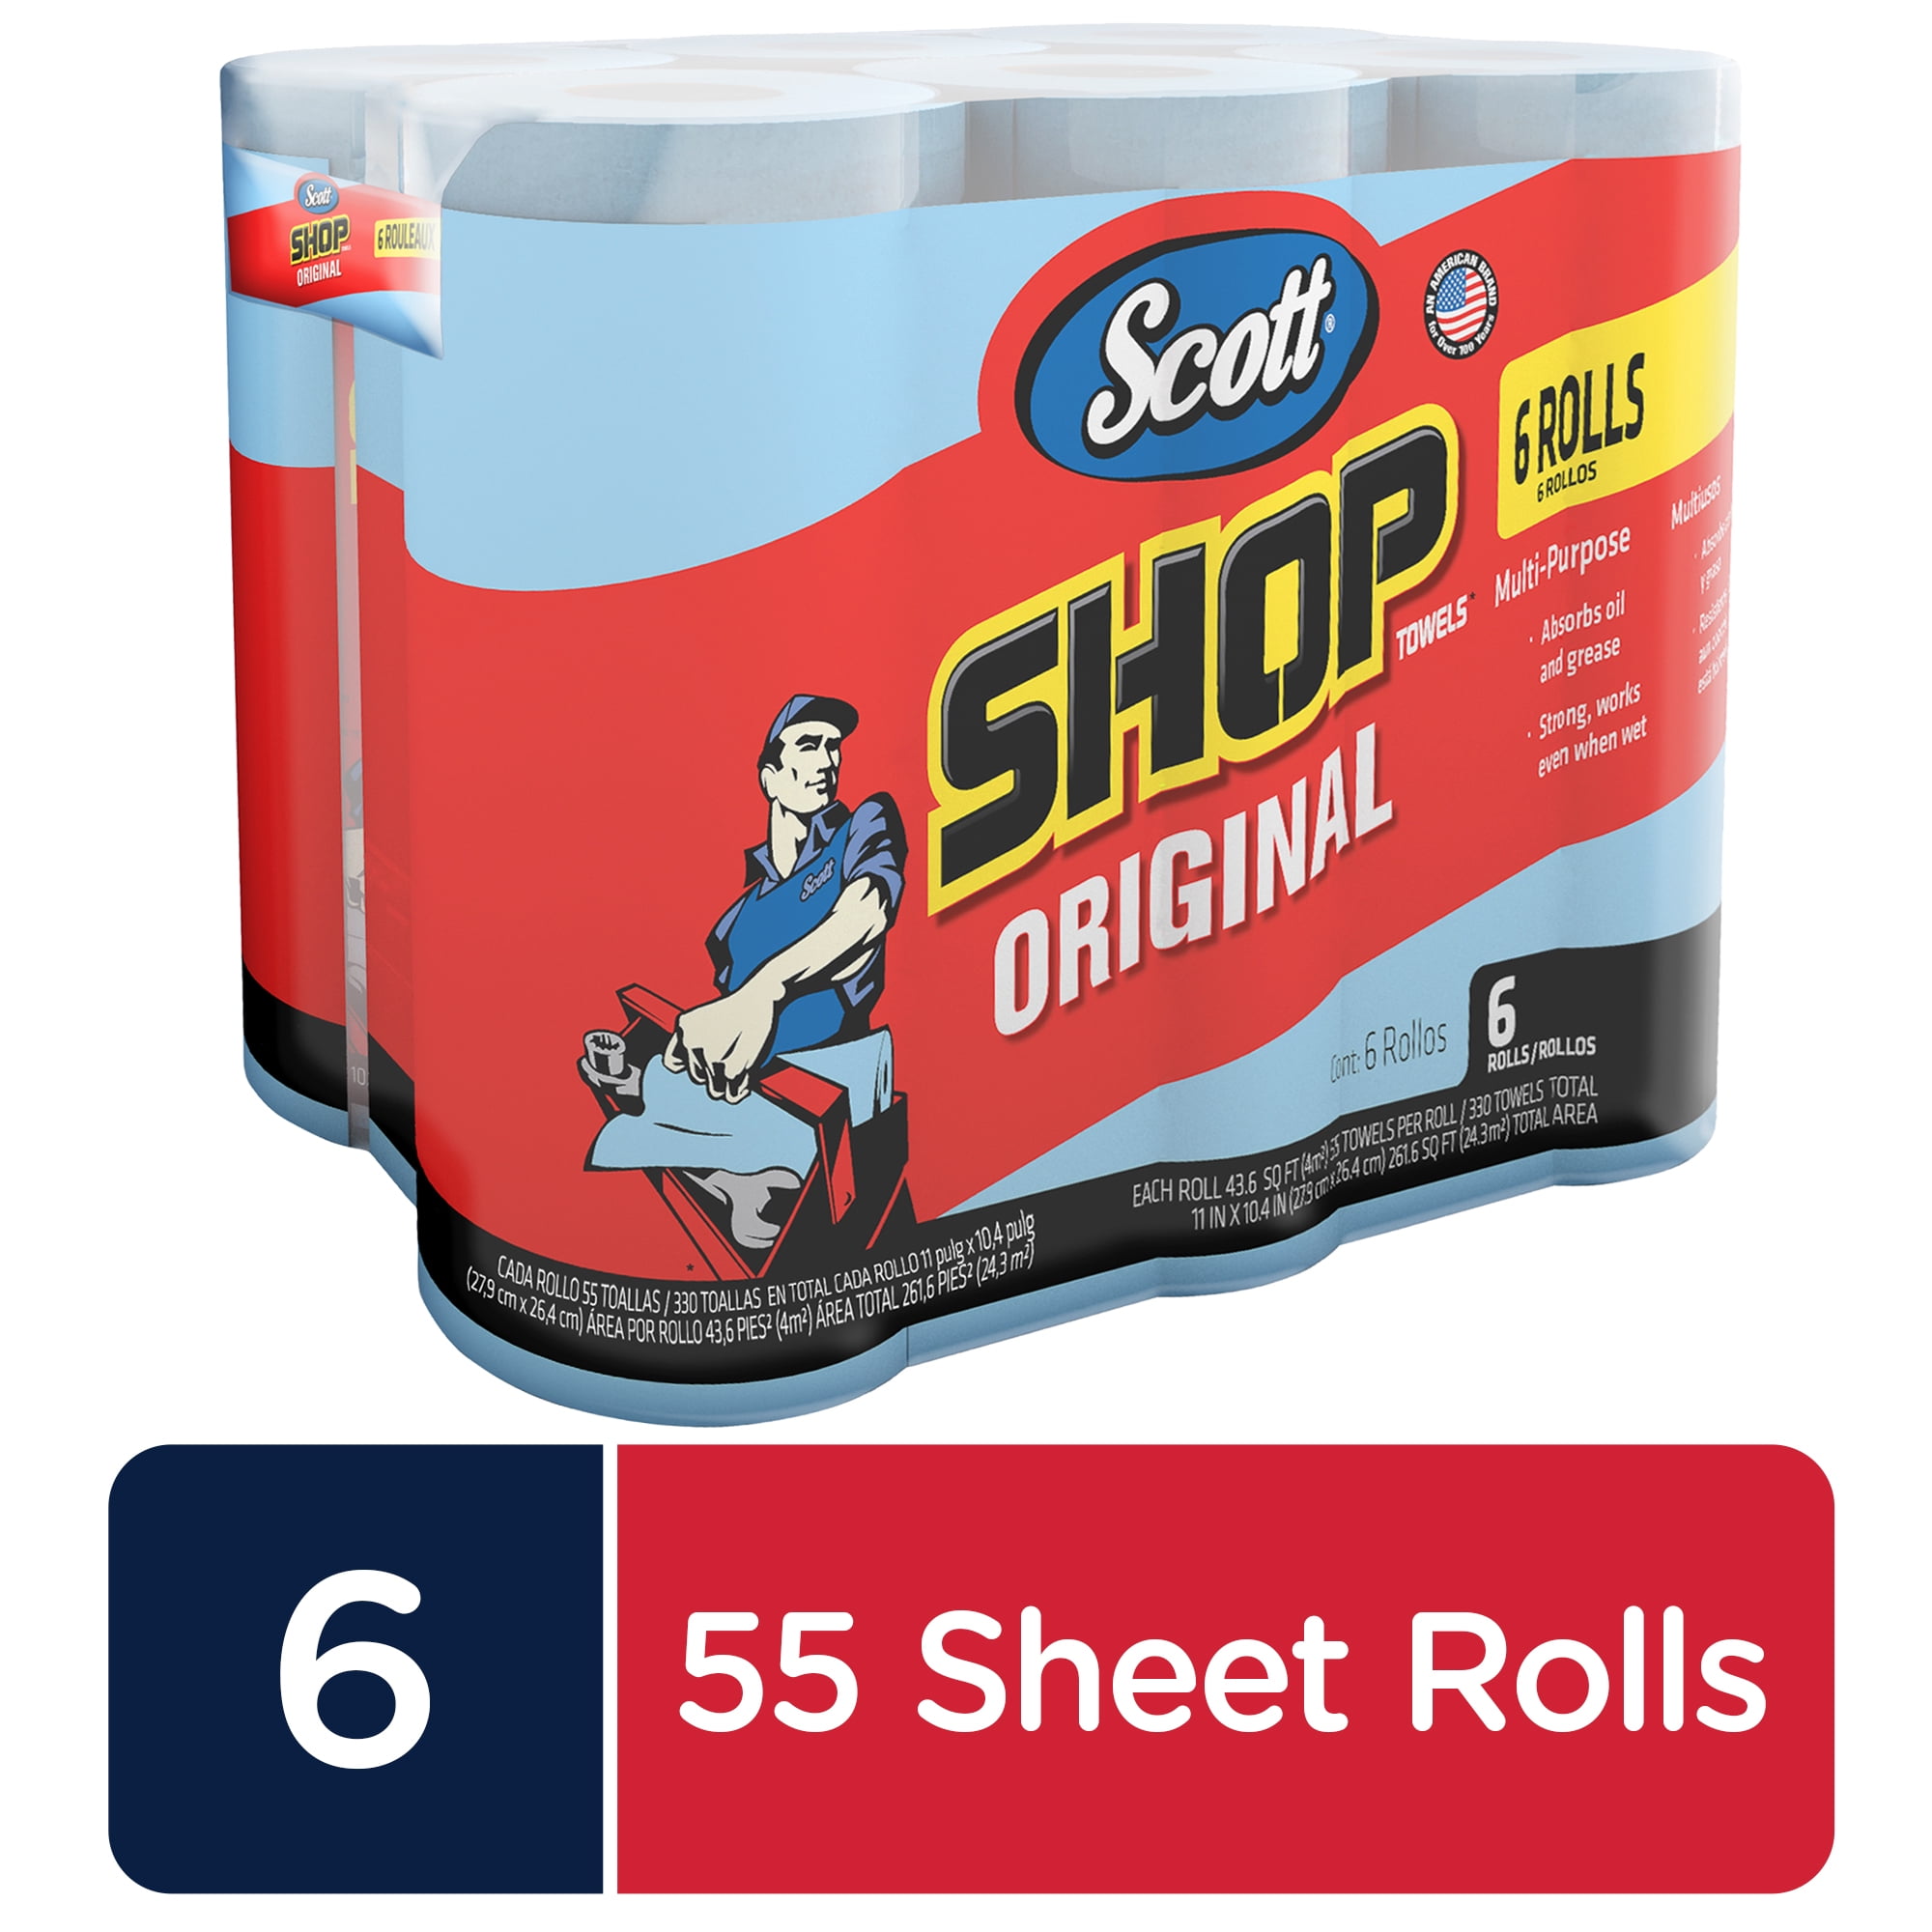 Scott Original Blue Shop Towel Roll  2 Pack FAST SHIPPING 